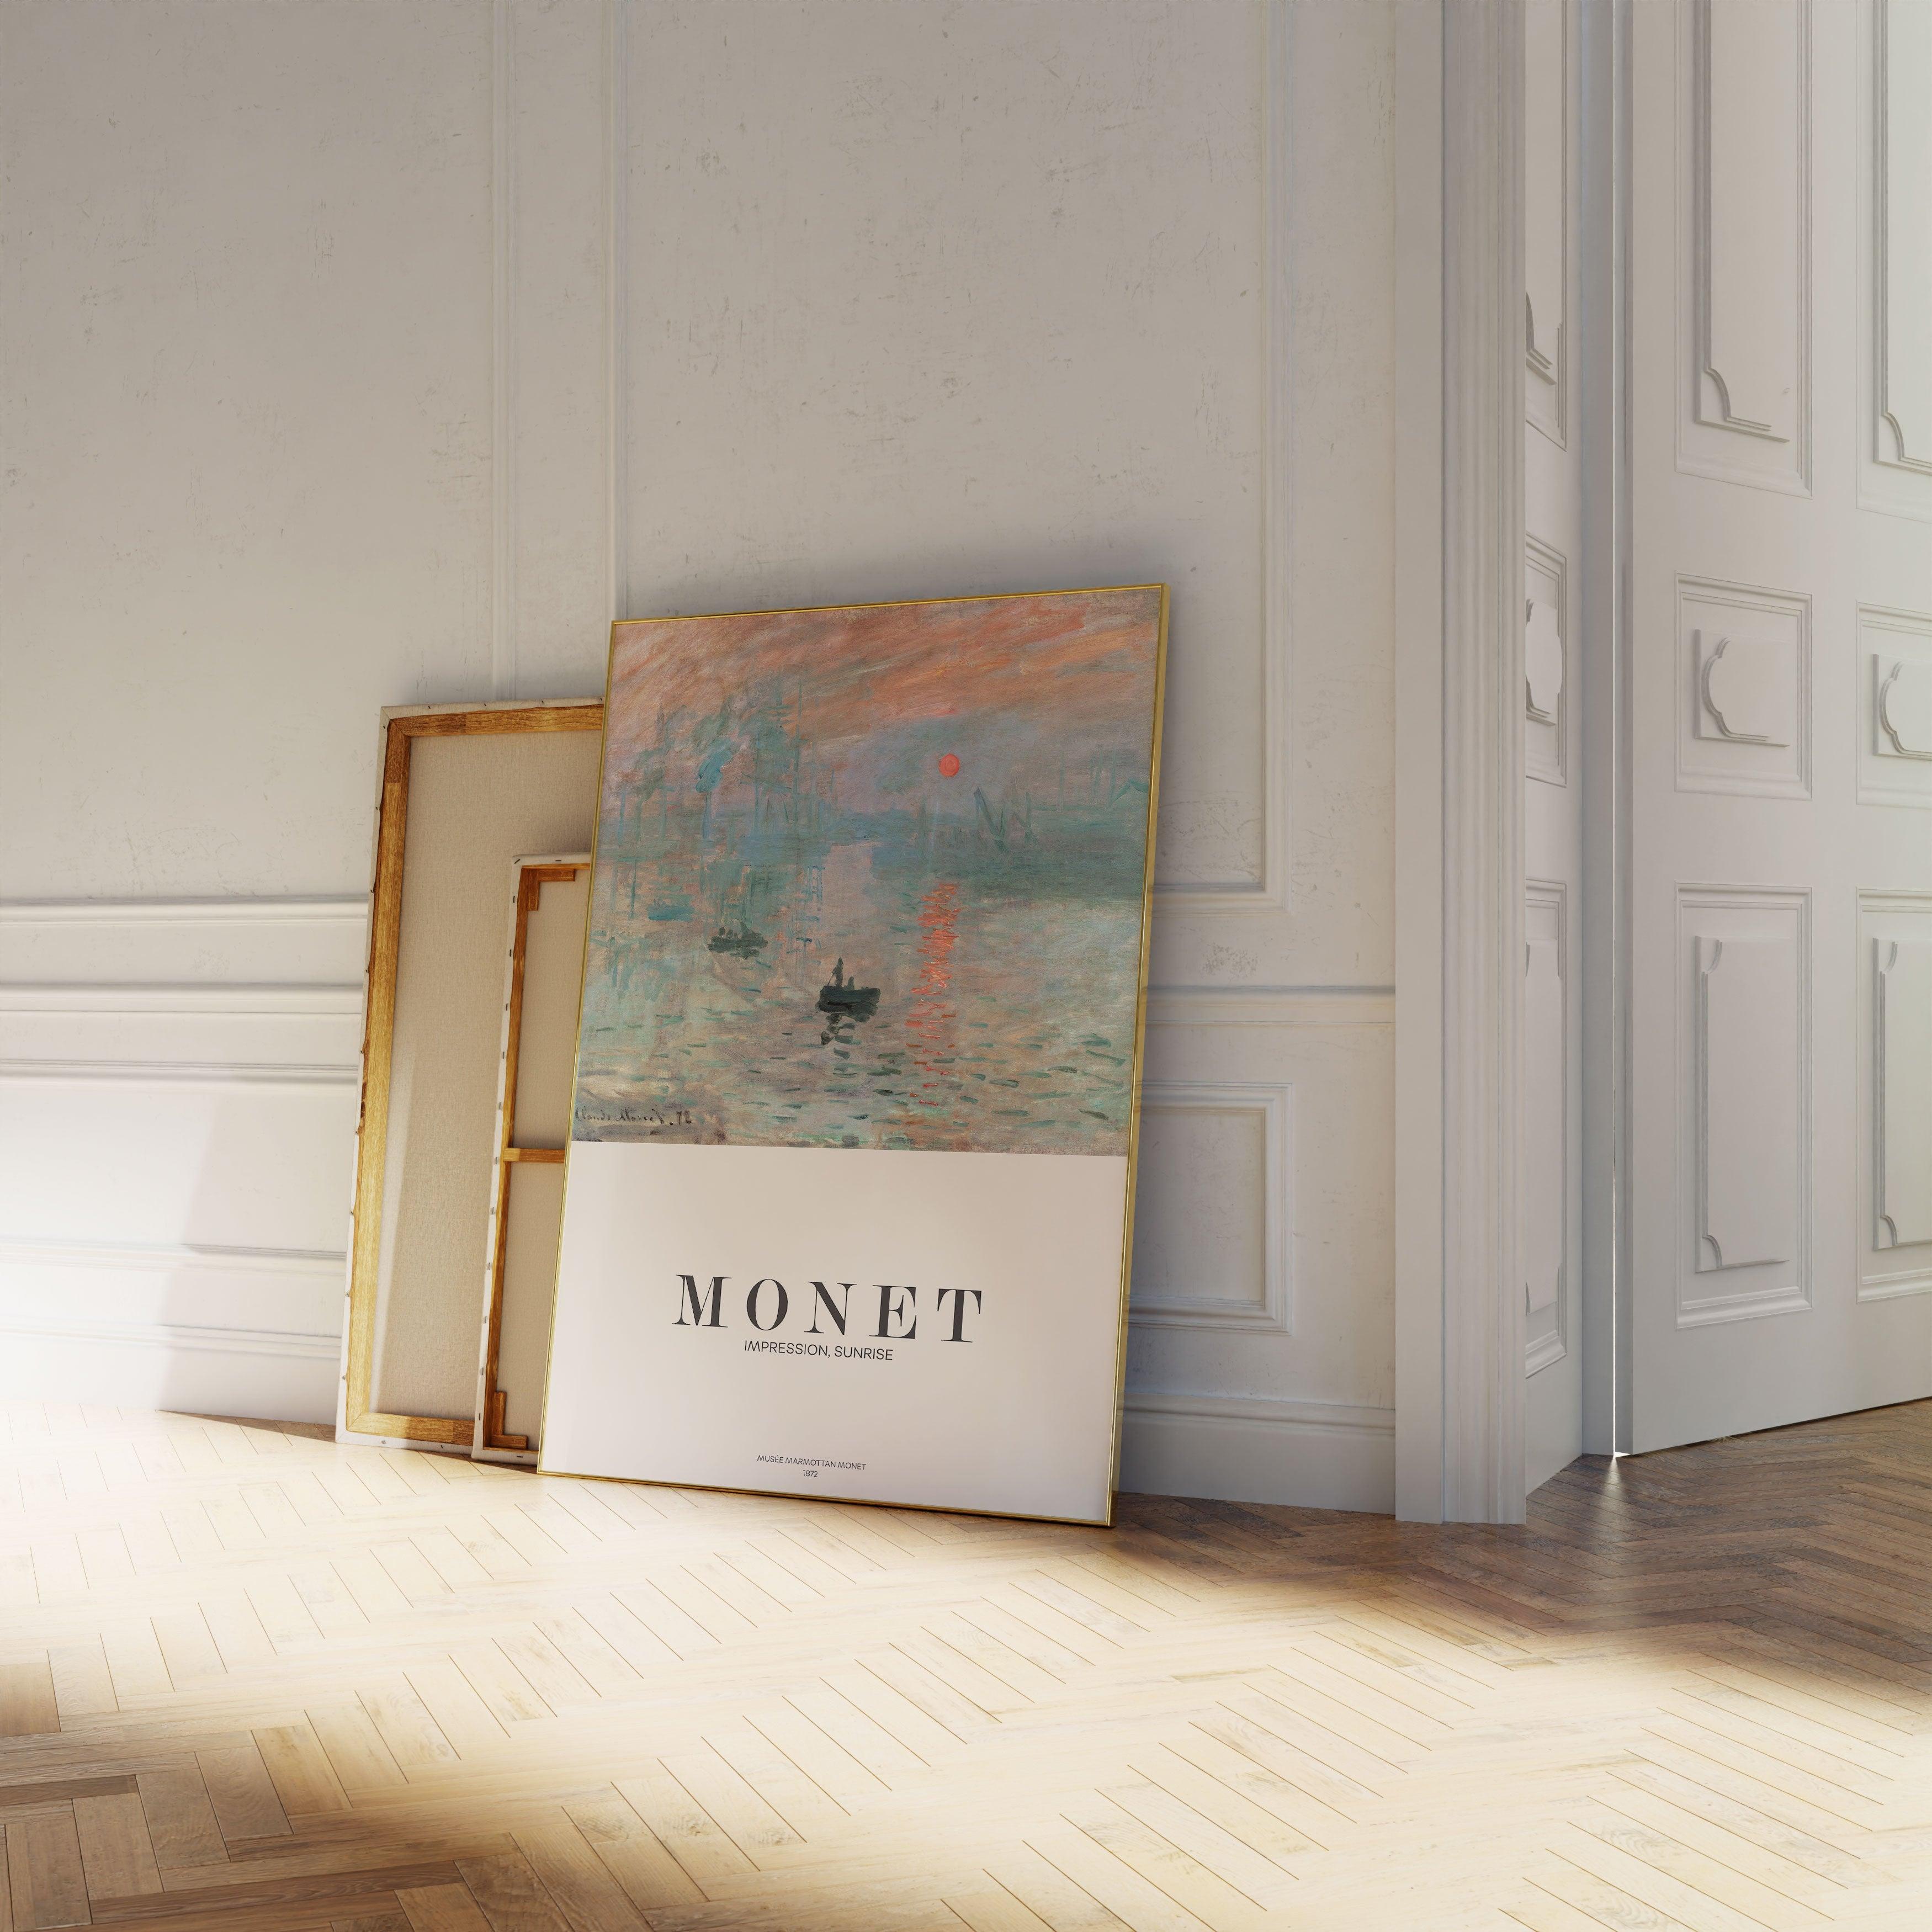 Claude Monet - Impression, Sunrise 2 - stravee - Wall Art Print